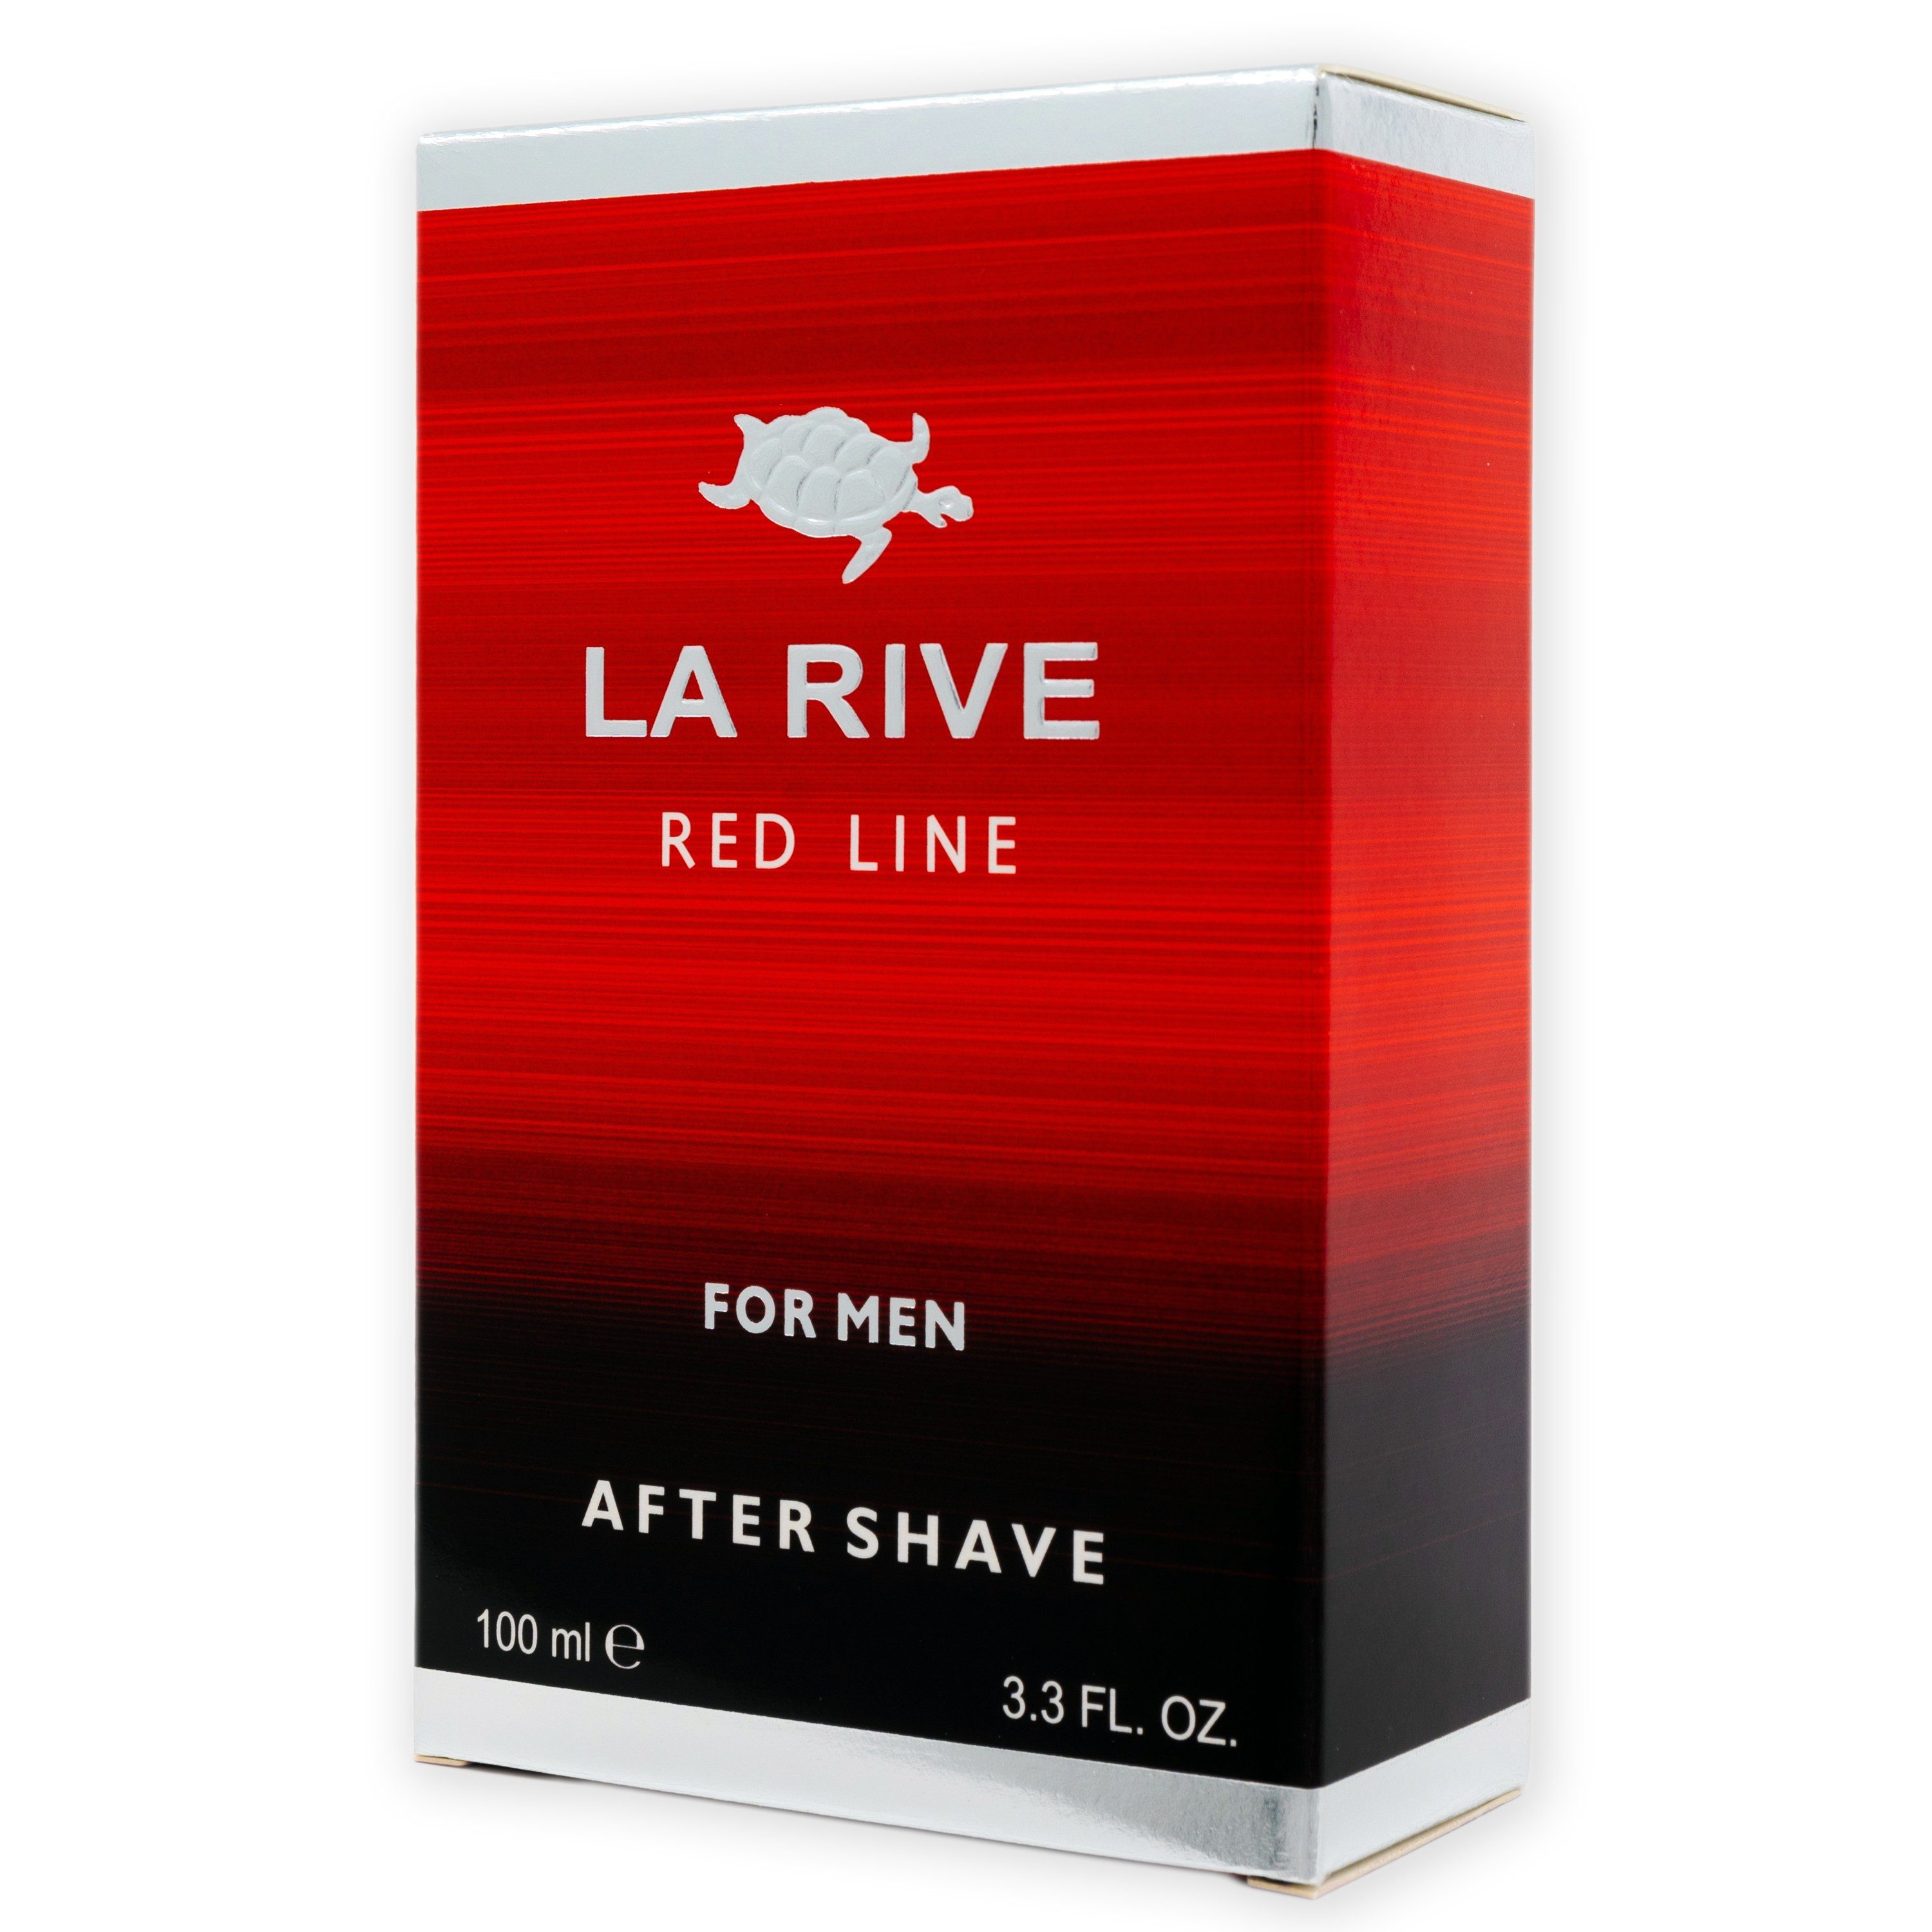 Rive ml After-Shave LA - RIVE 100 Red Line - La After Shave